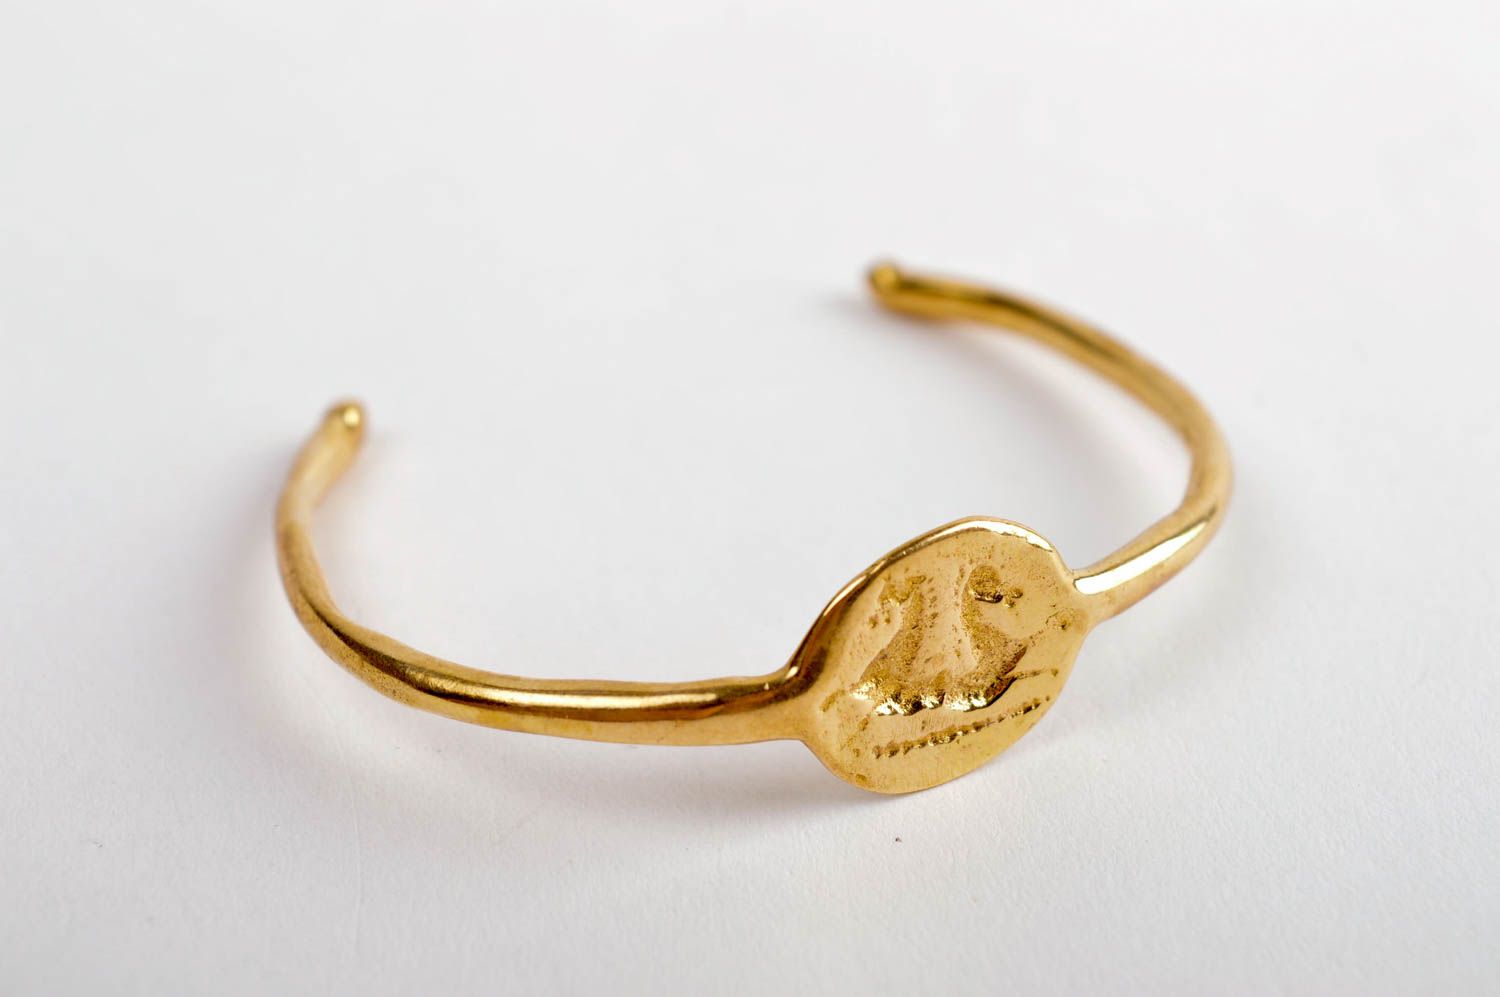 Handmade jewelry metal bracelet designer jewelry bracelet for women gift for her photo 2